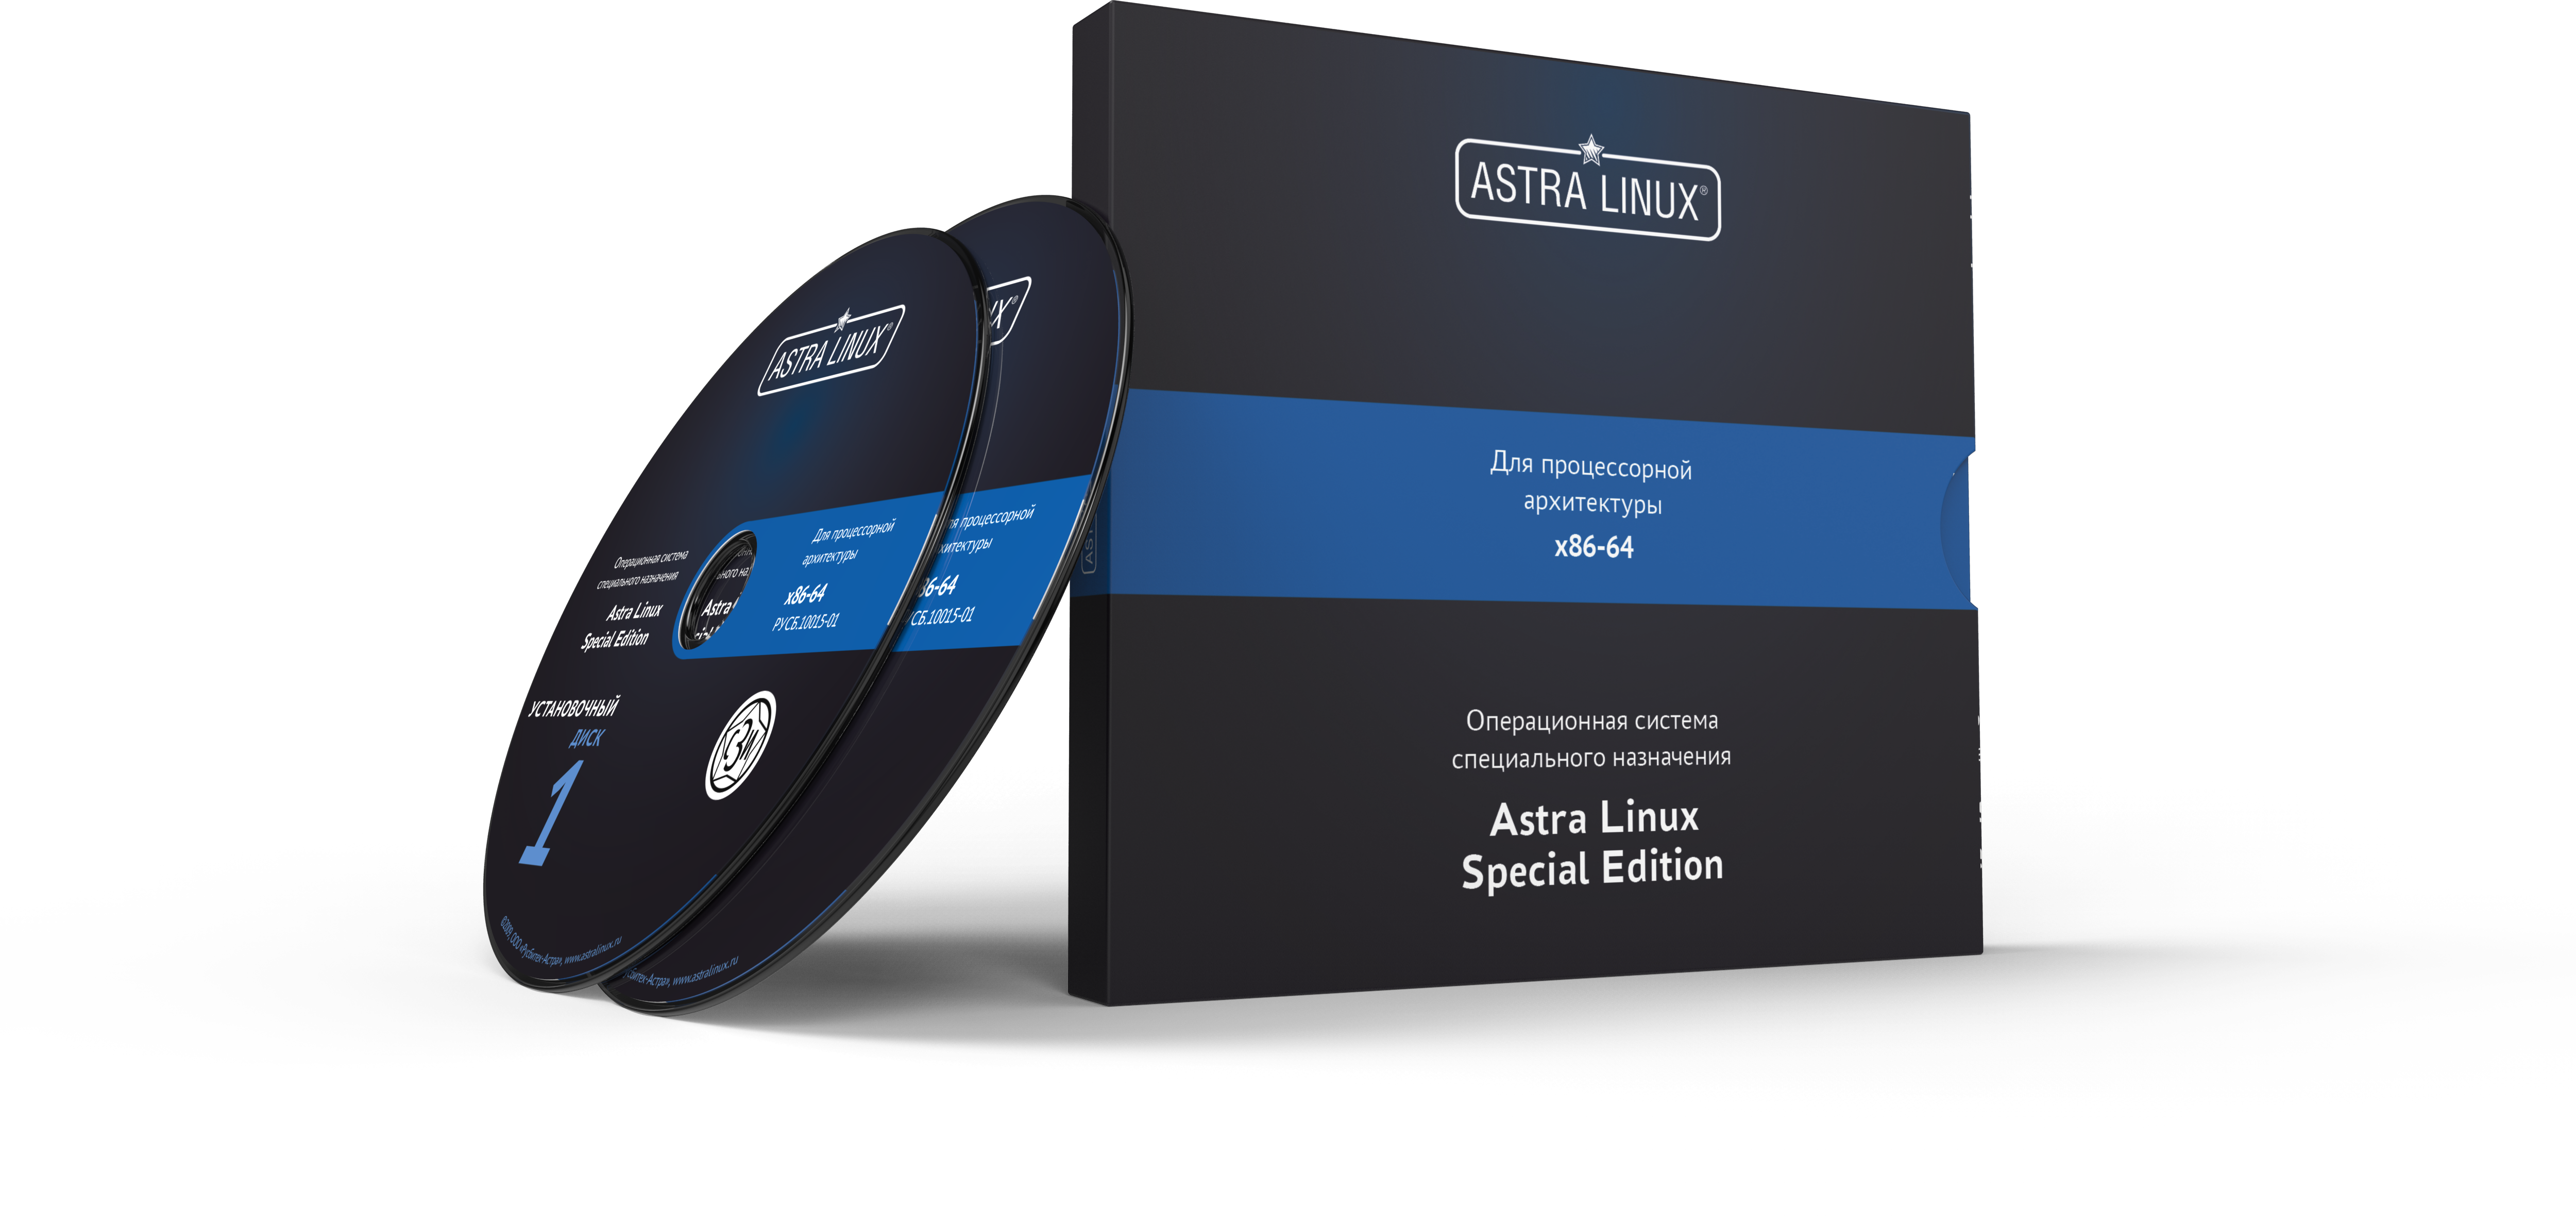 Astra Linux Special Edition 1.7 - Воронеж, "Усиленный", ФСТЭК, на 24 мес., ТП "Стандарт" на 24 мес.